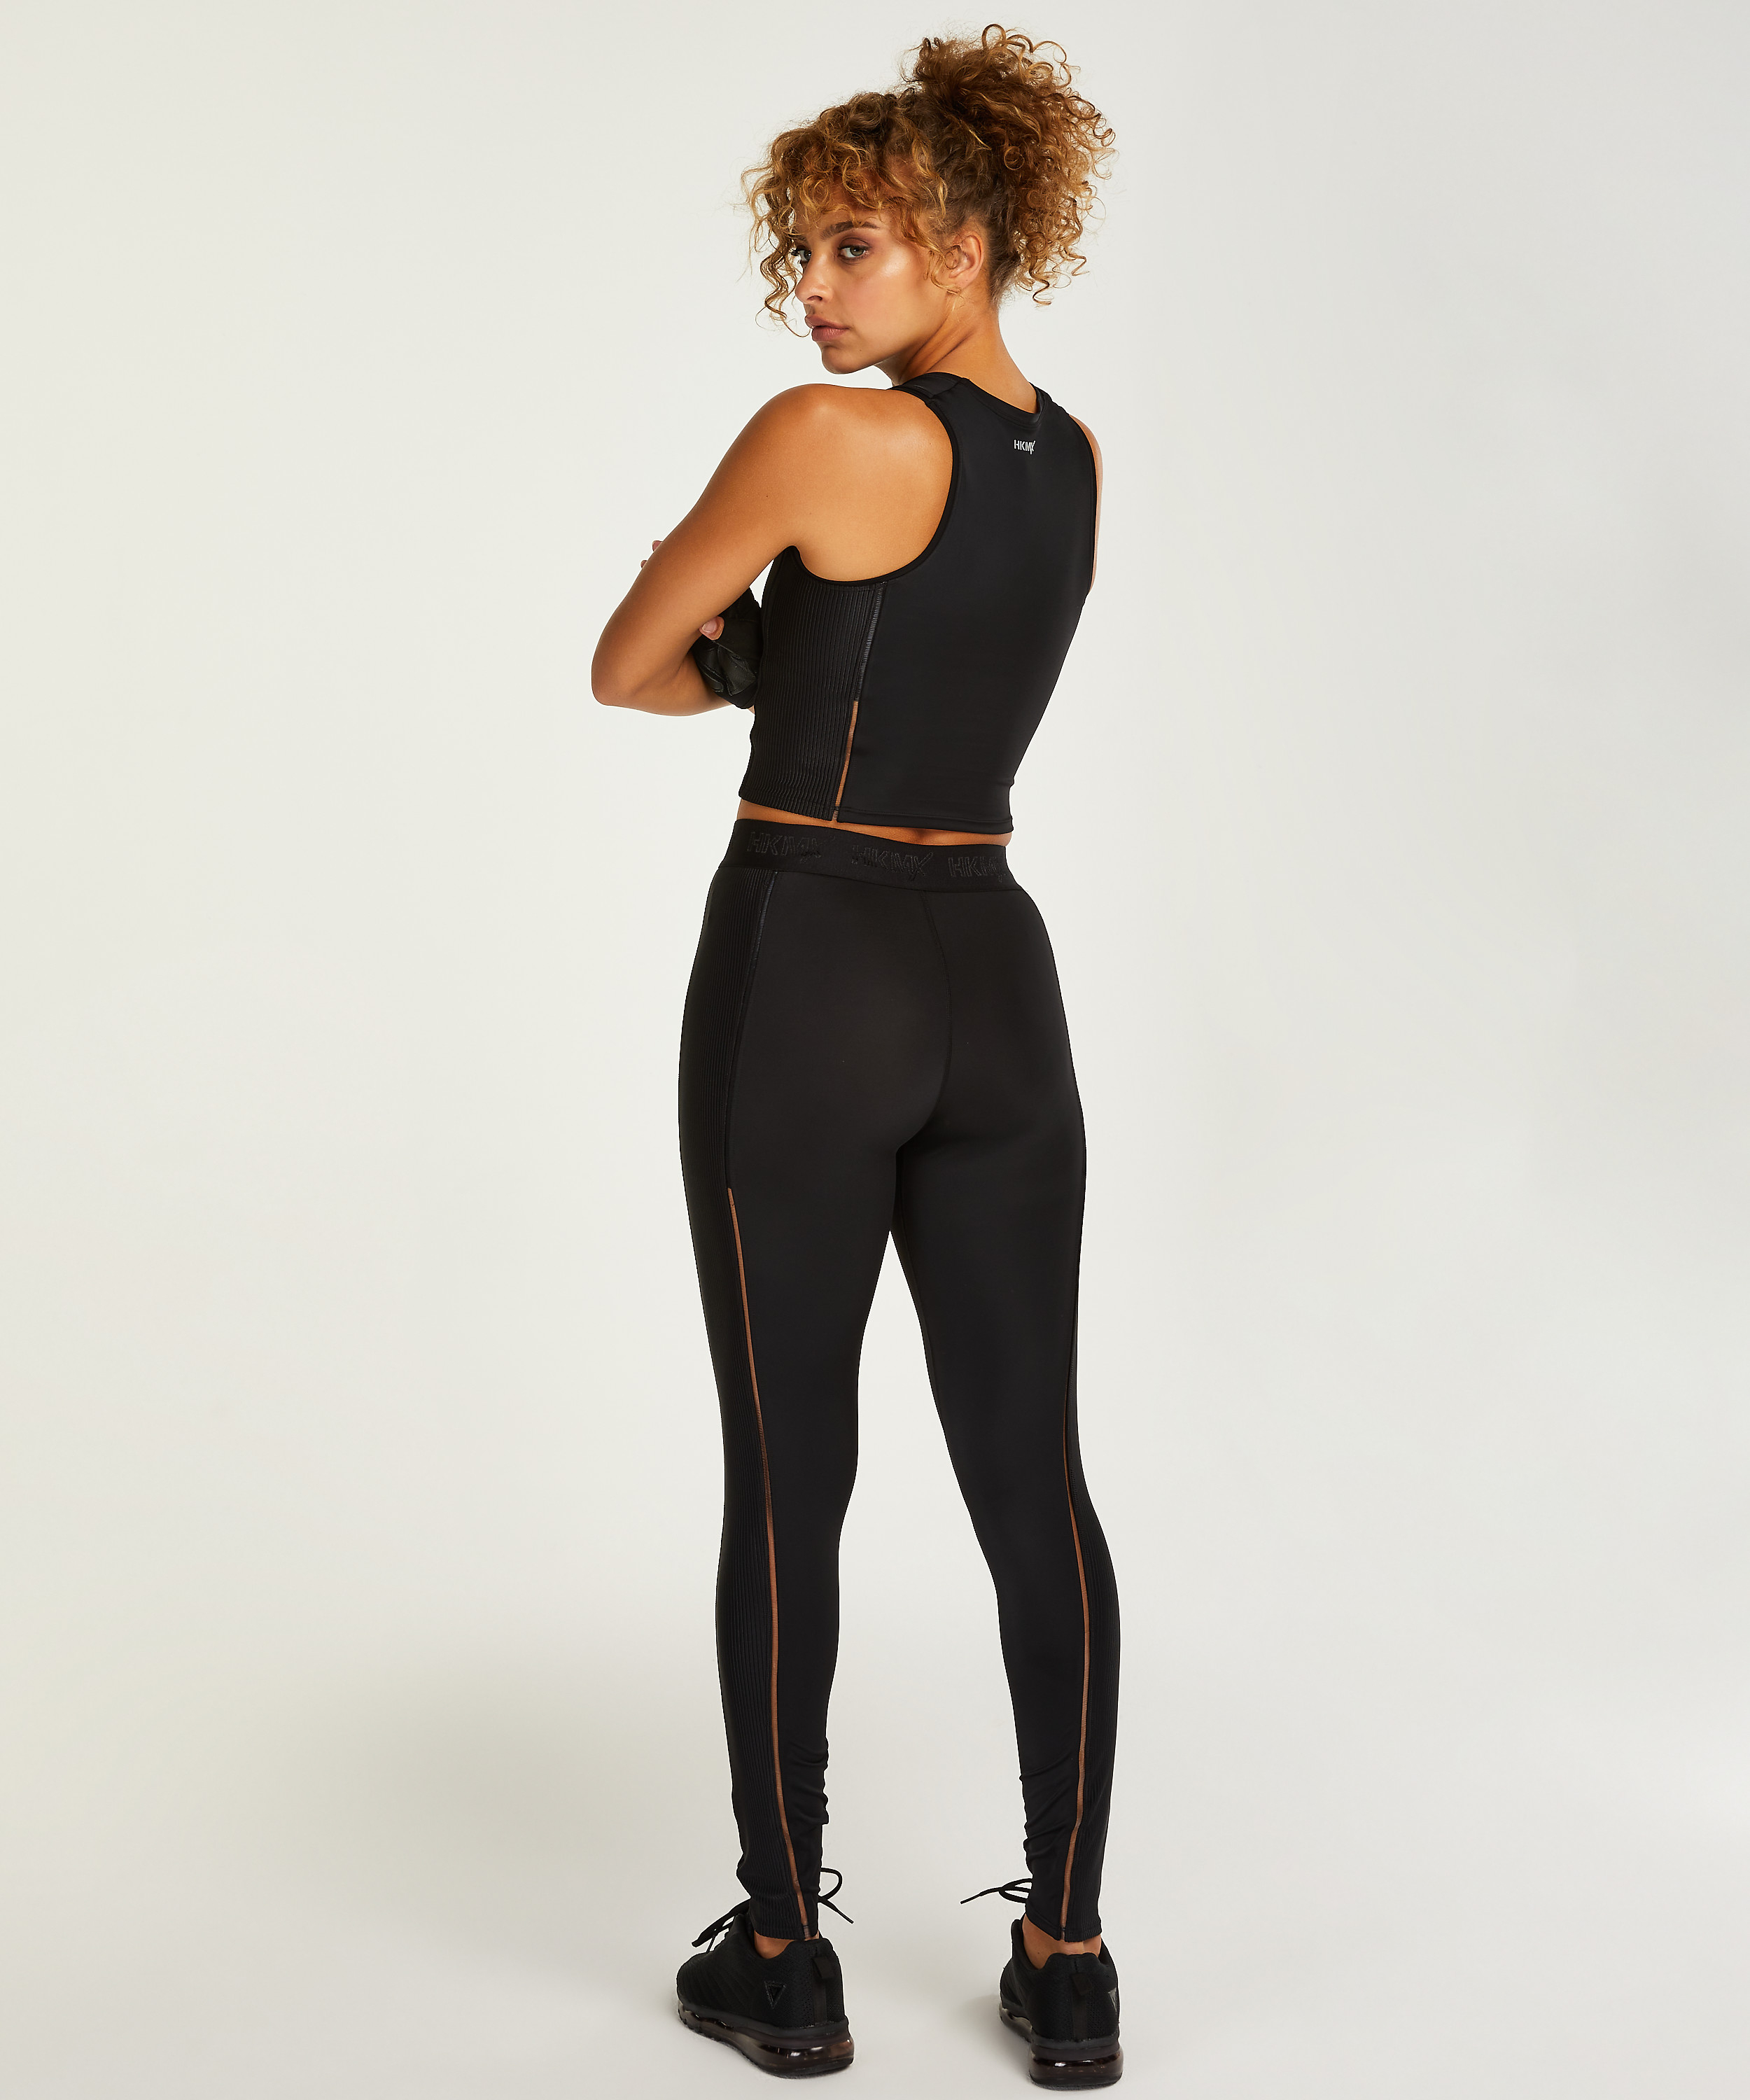 HKMX High-waisted sports leggings Zenna, Black, main